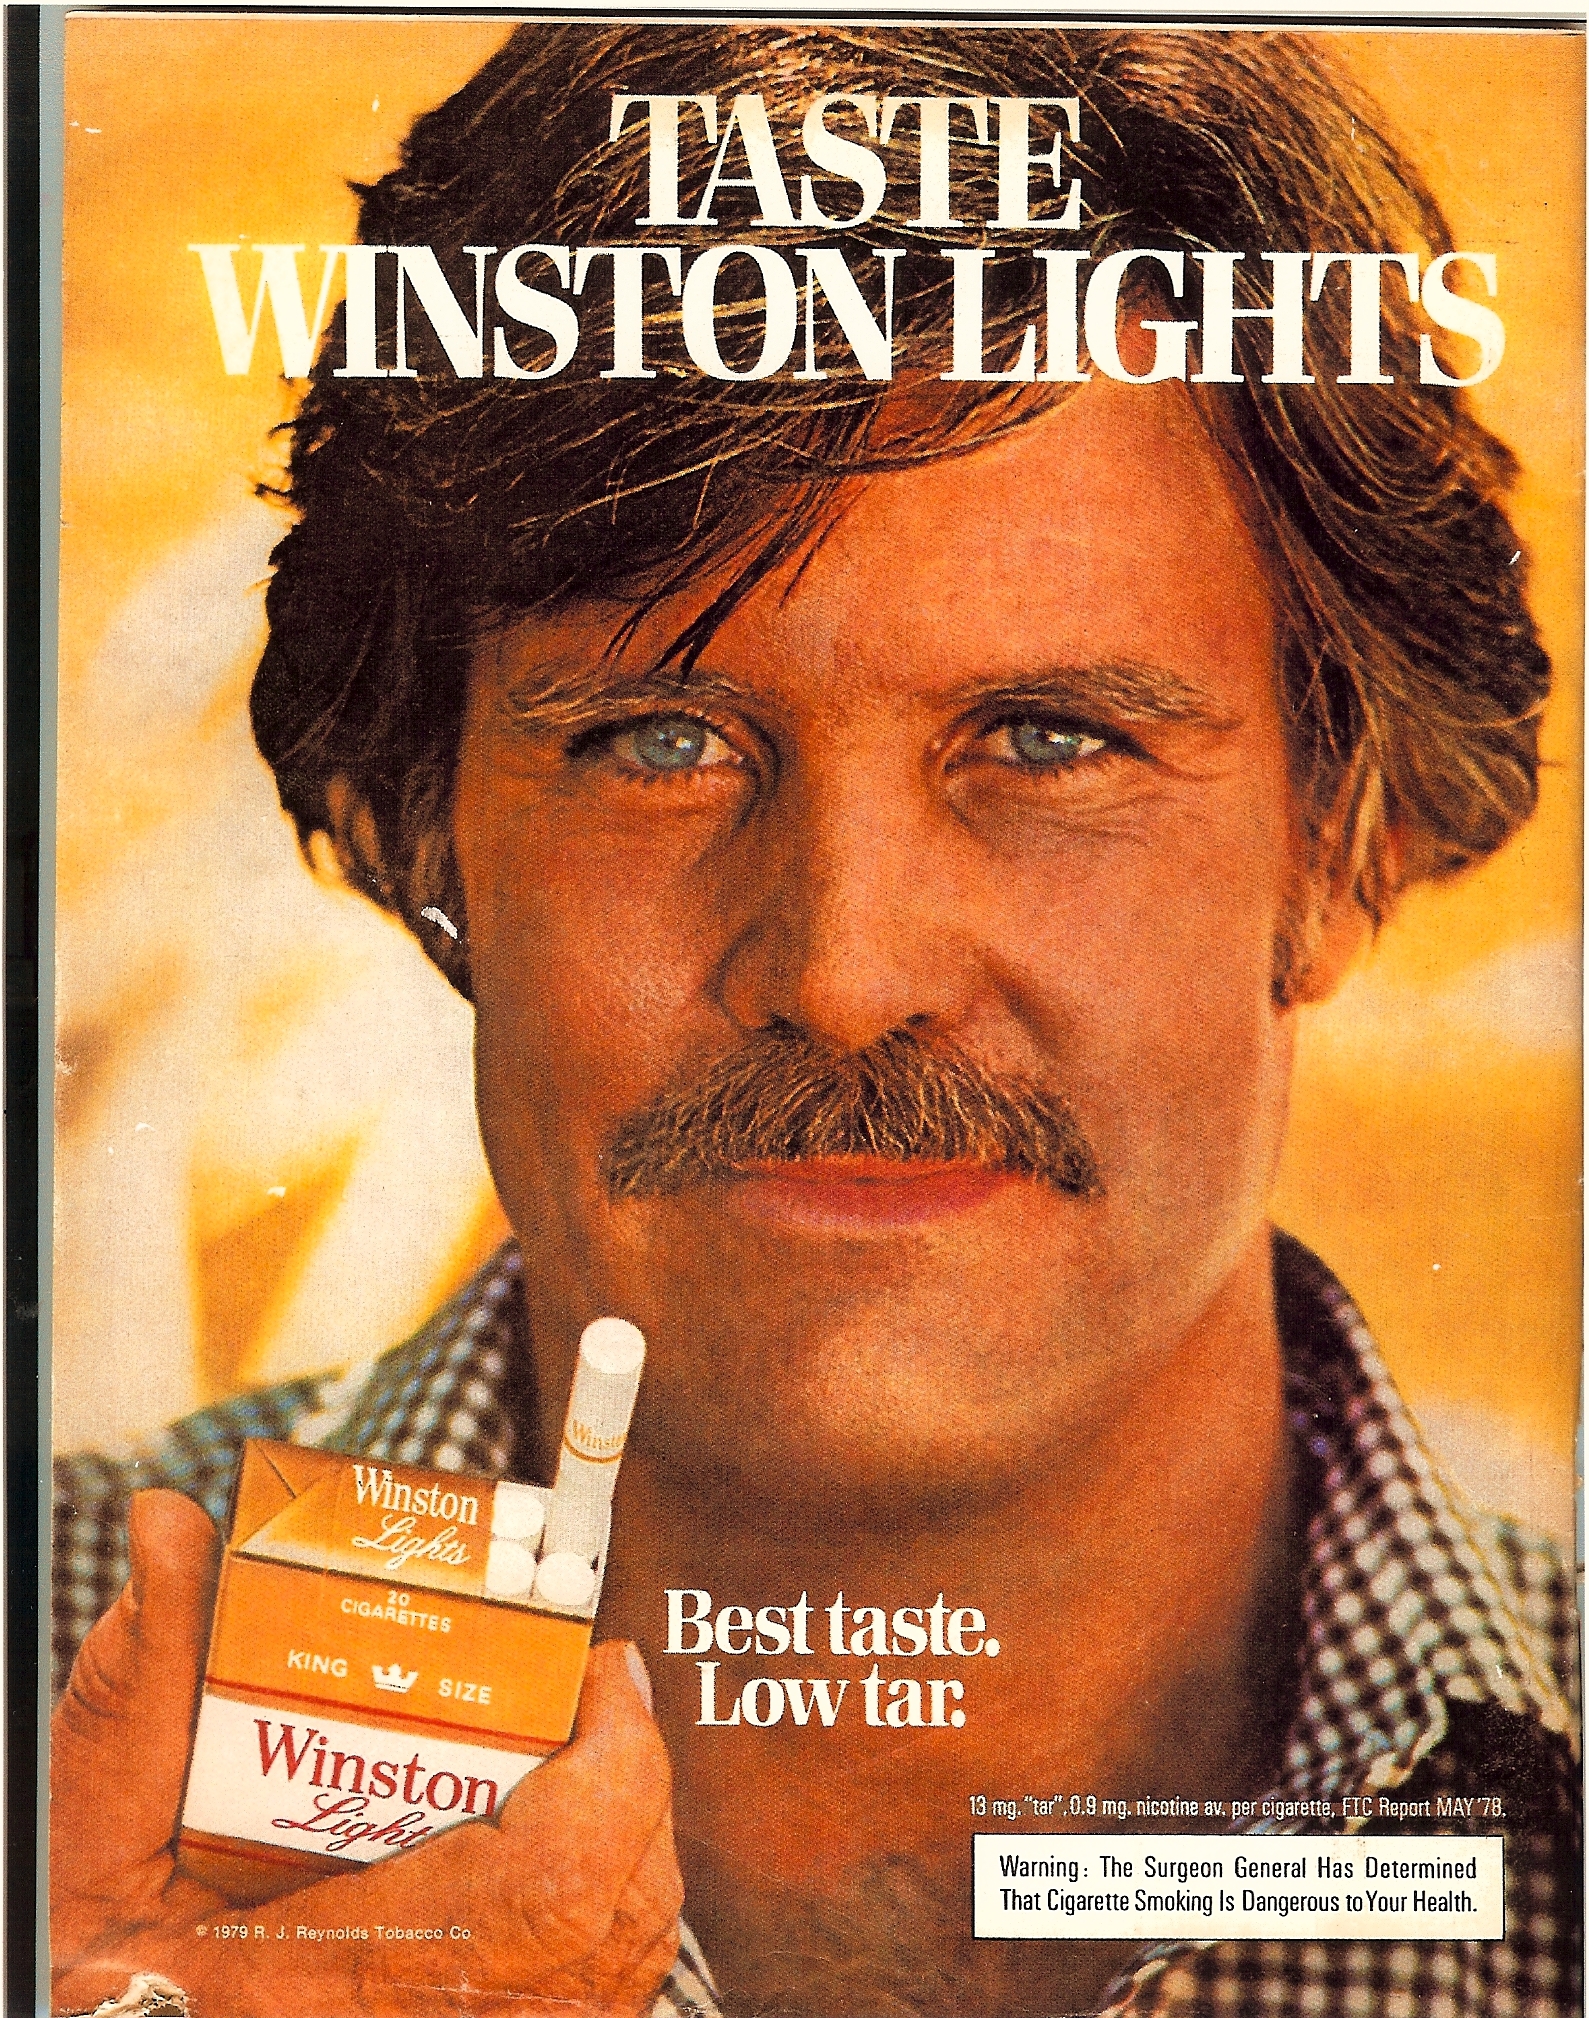 Wenston Man 1978-1982. Publications, Billboards, Films